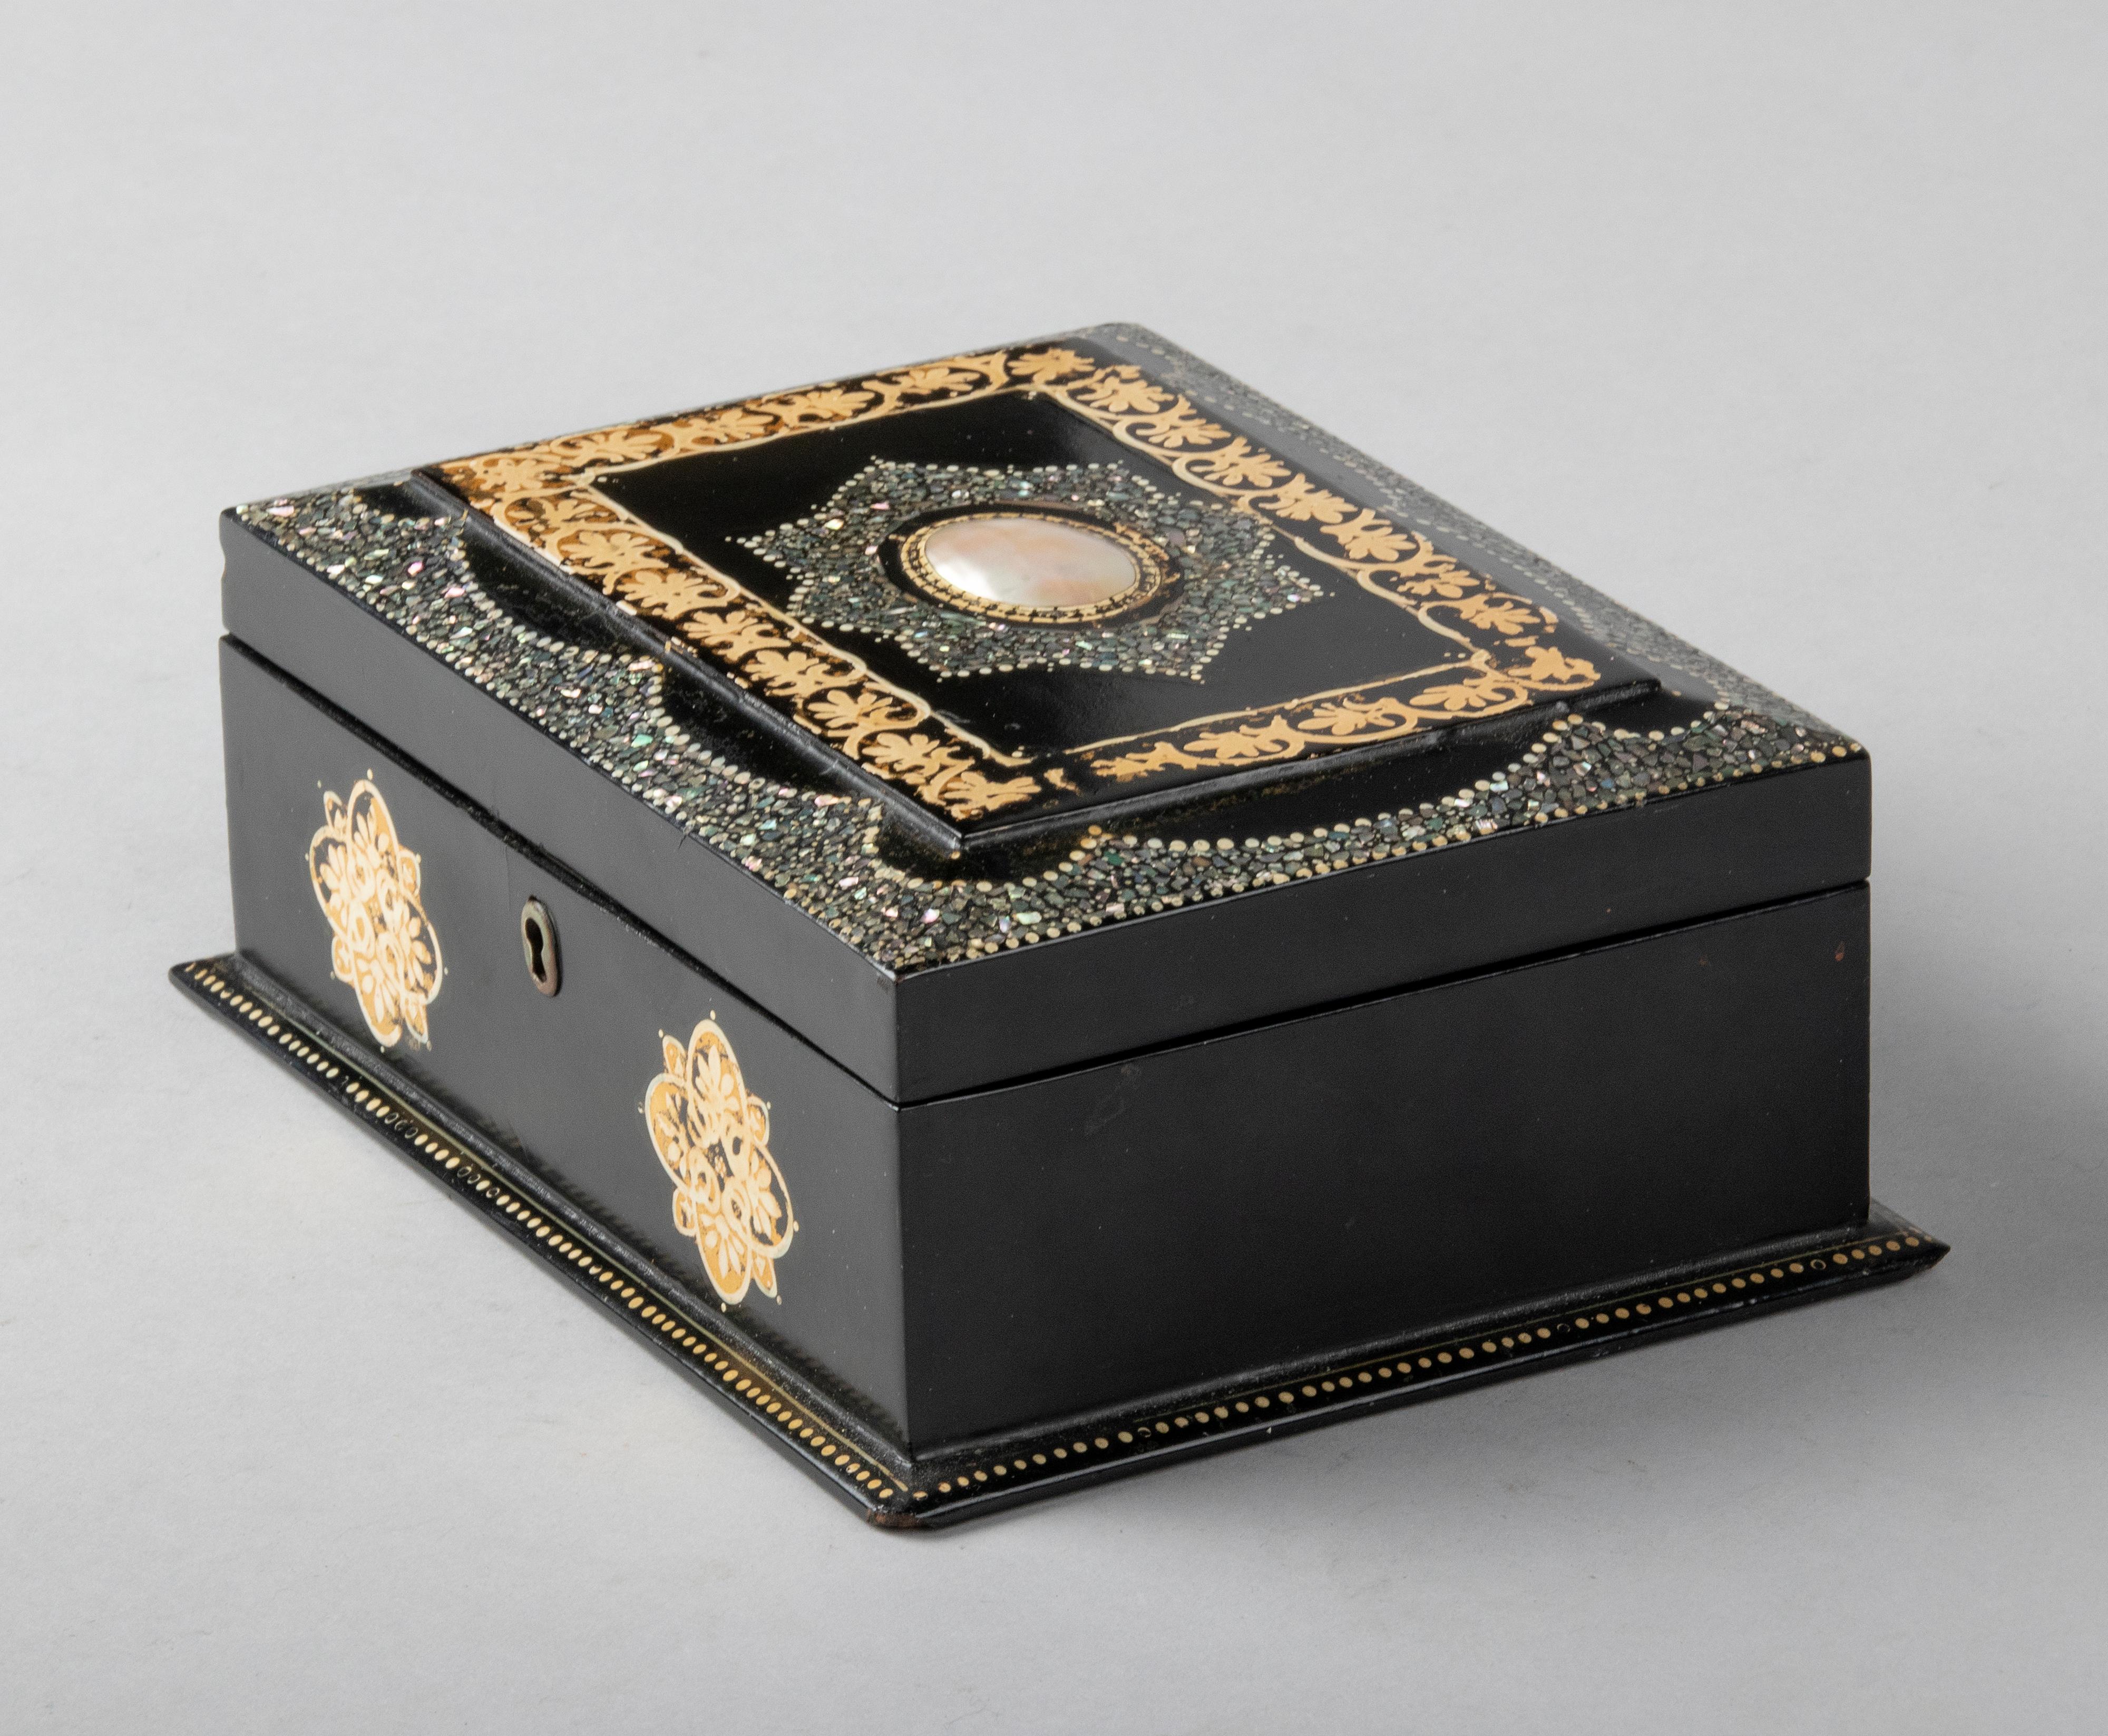 19th century jewelry box